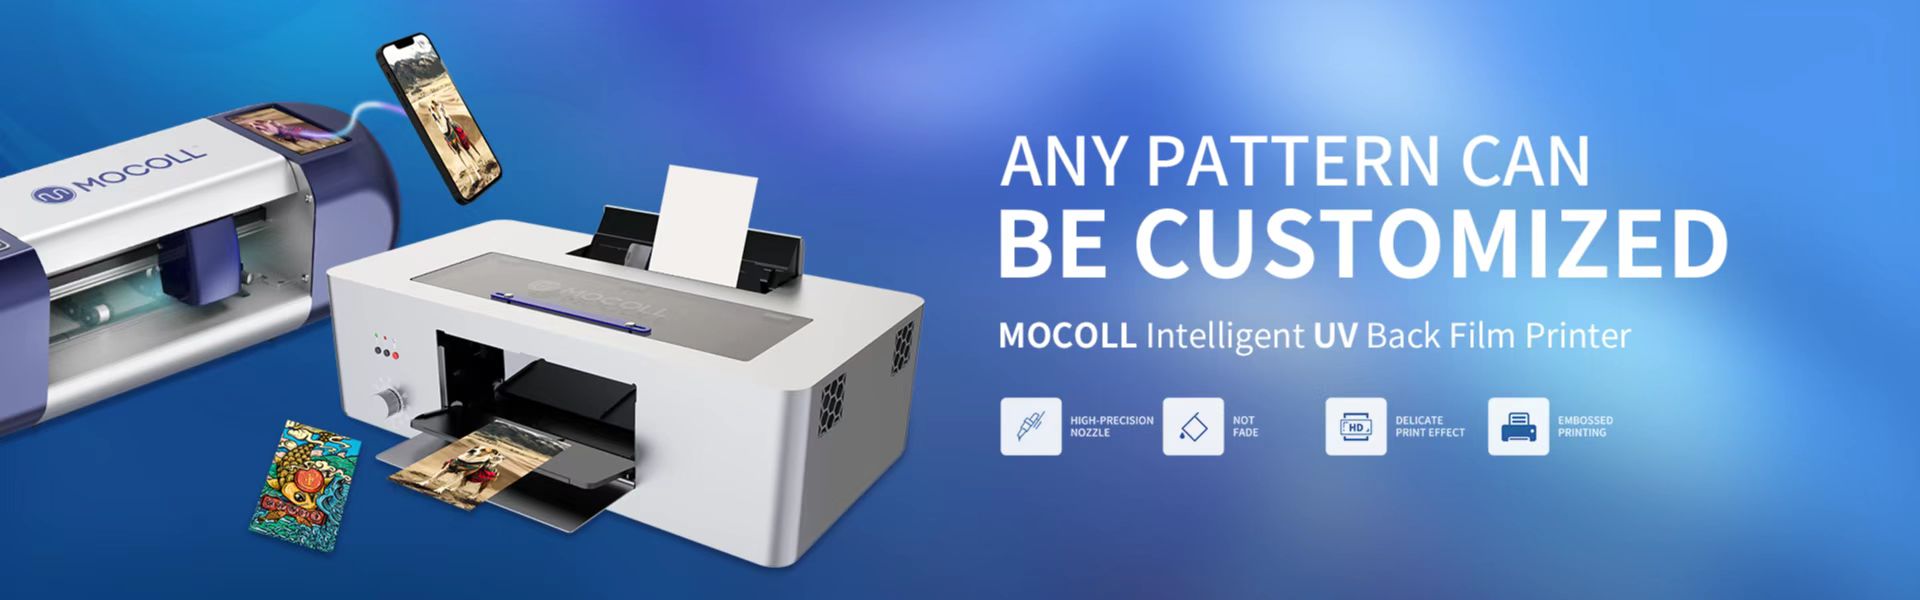 MOCOLL Intelligent UV Back Film Printer